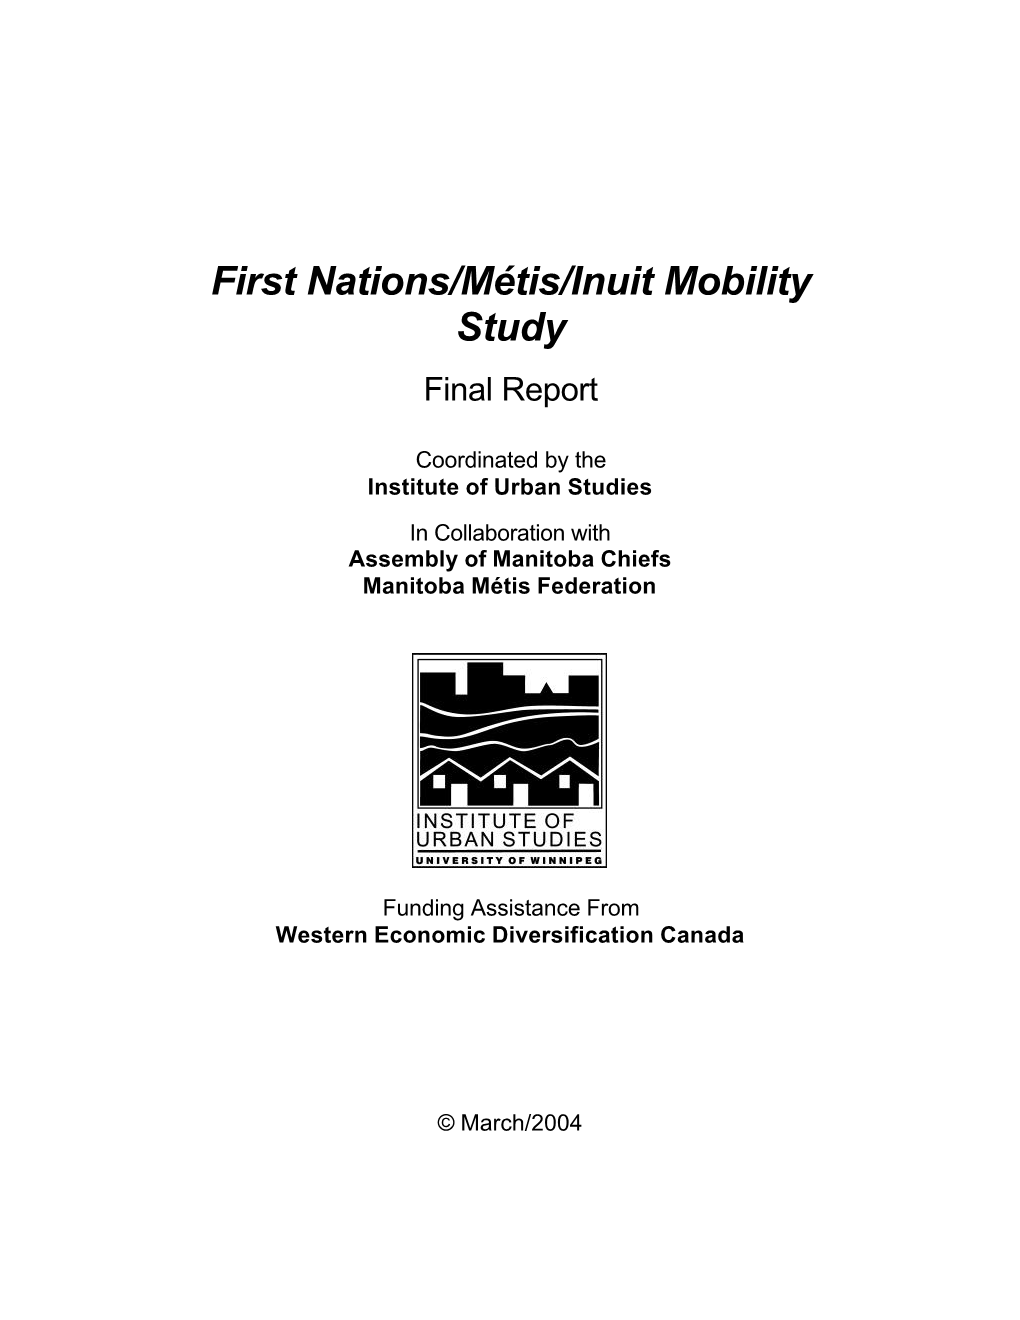 First Nations/Métis/Inuit Mobility Study Final Report